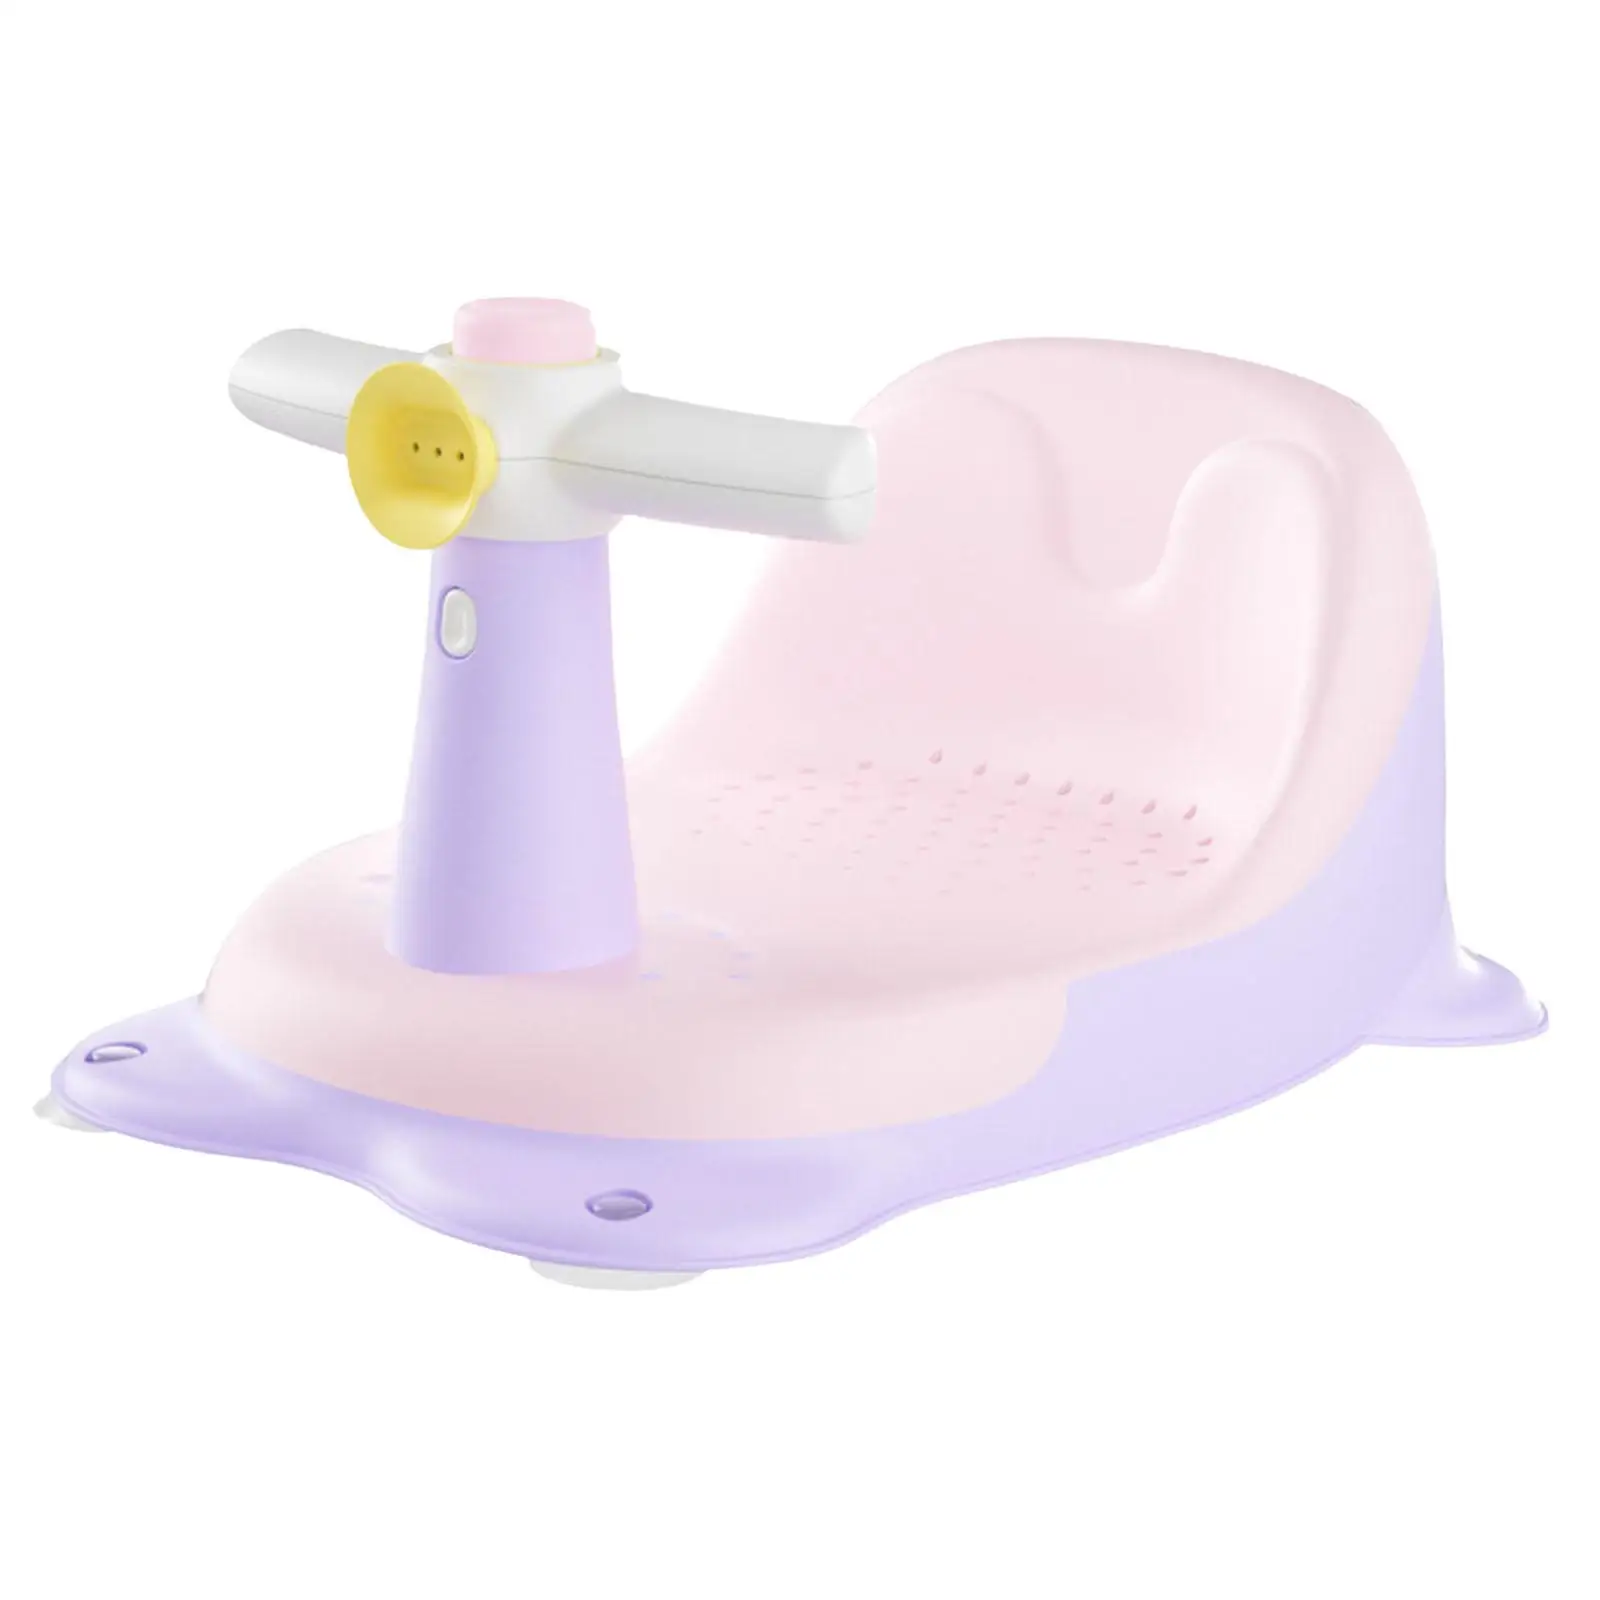 Household Baby Bath Tub Seat Anti Slip Summer Bathtub for Baby 6-18 Months